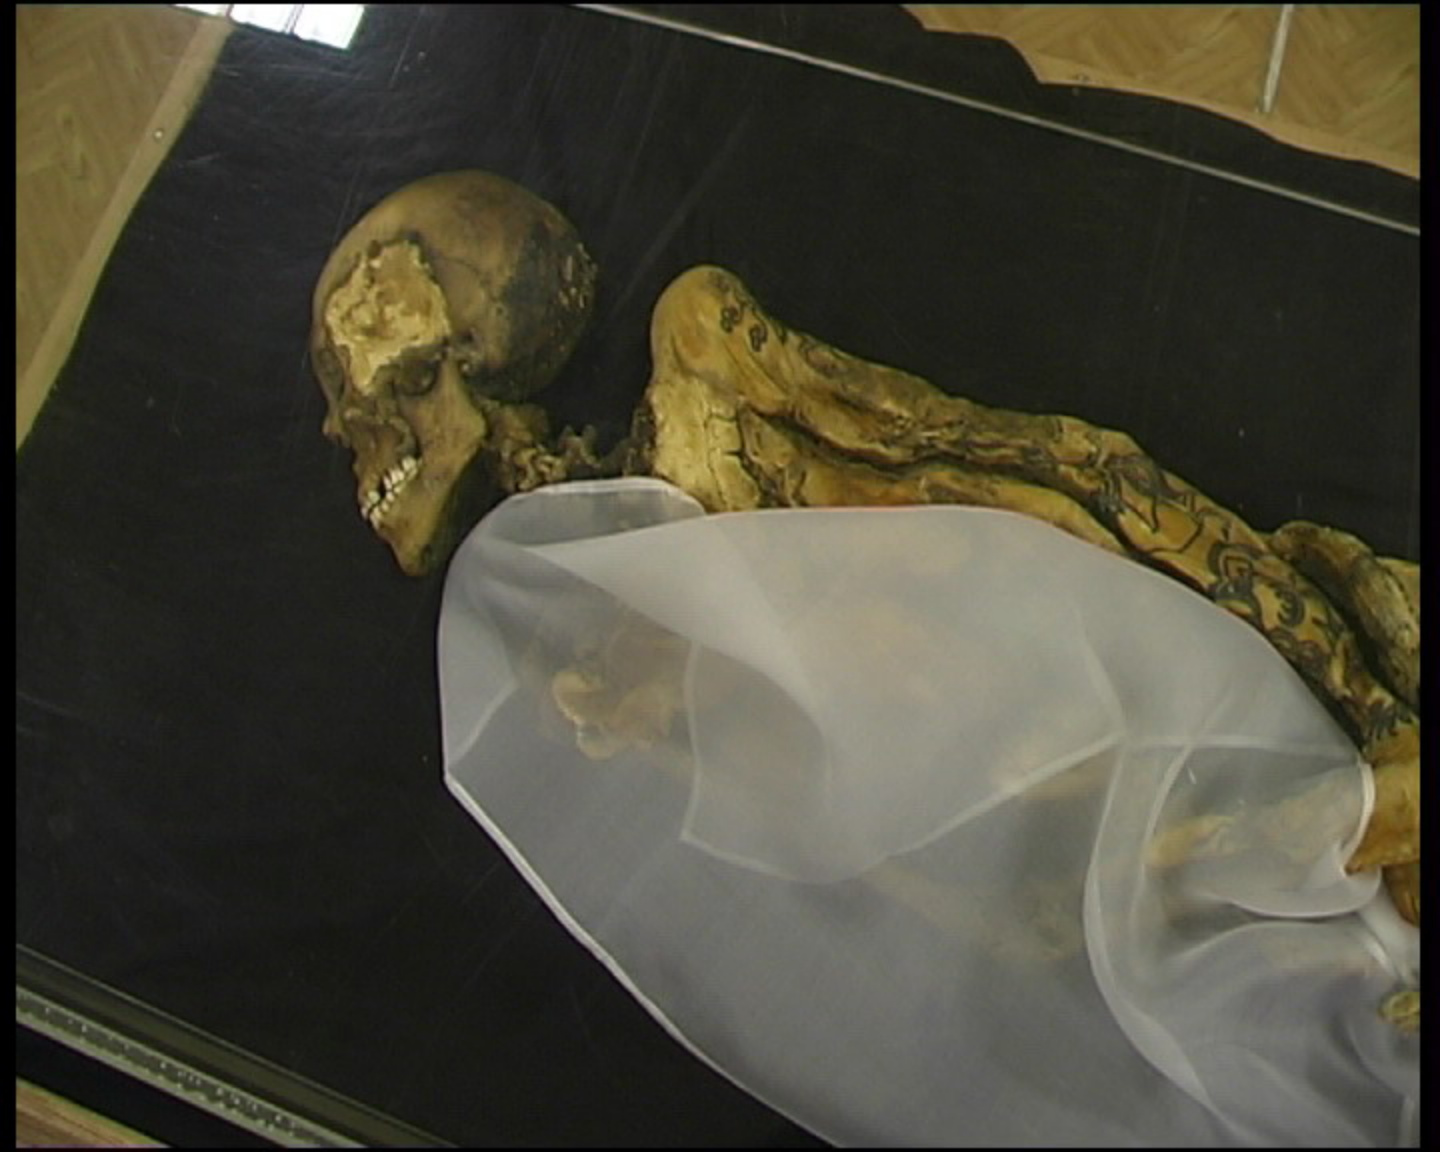 Princess Ukok/Princess of the Altai: Μια μούμια που βρέθηκε το 1993 σε ένα κουργκάν στο απομακρυσμένο οροπέδιο Ukok στη Δημοκρατία του Αλτάι στη Ρωσία